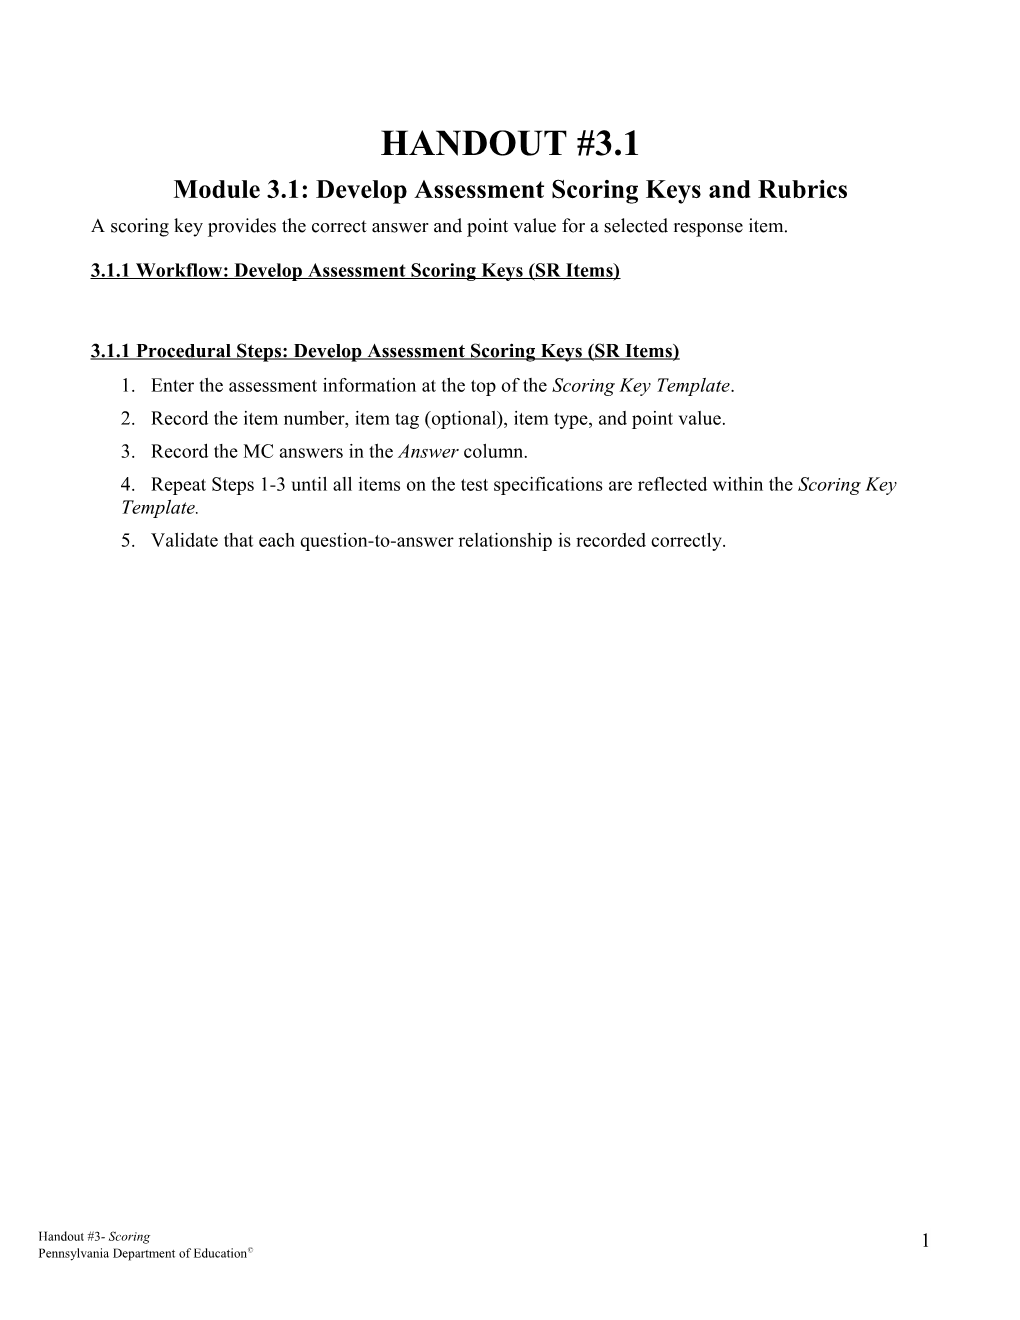 Module 3.1: Develop Assessment Scoring Keys and Rubrics